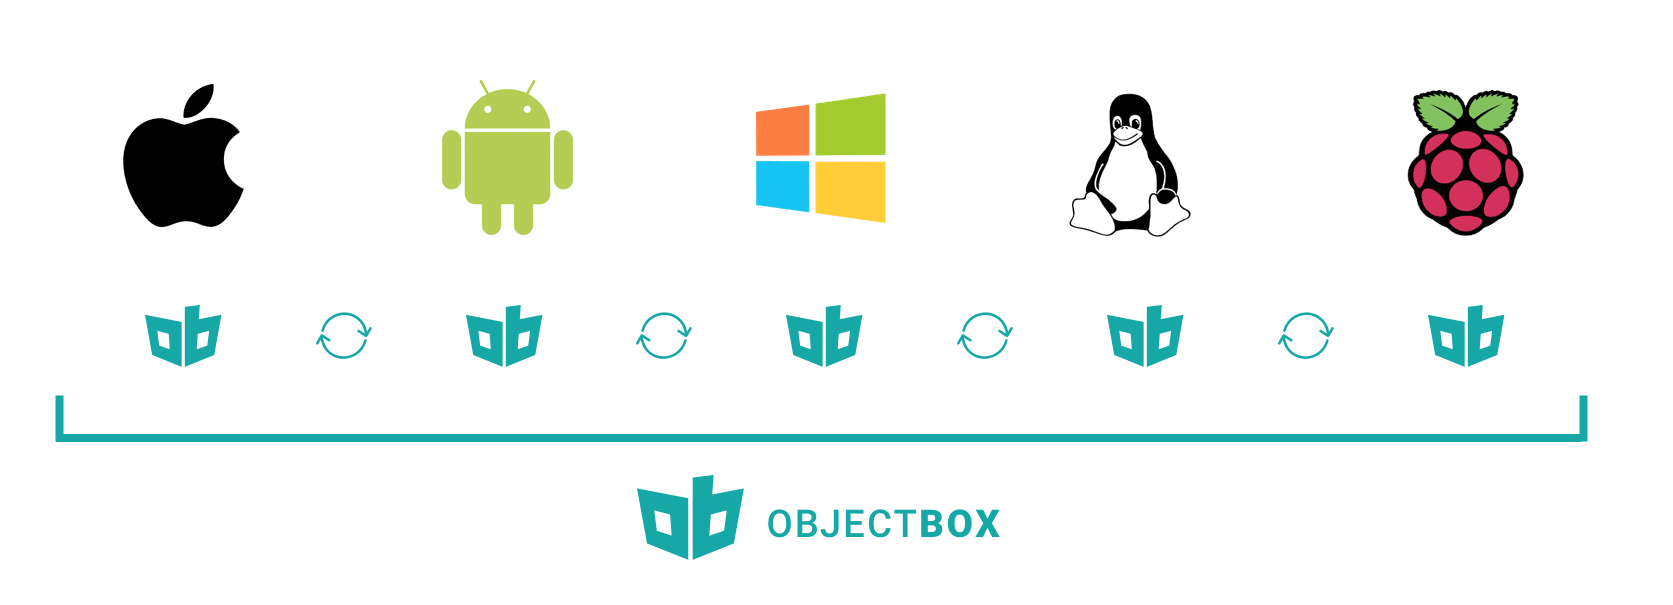 ObjectBox Edge Computing Case Study